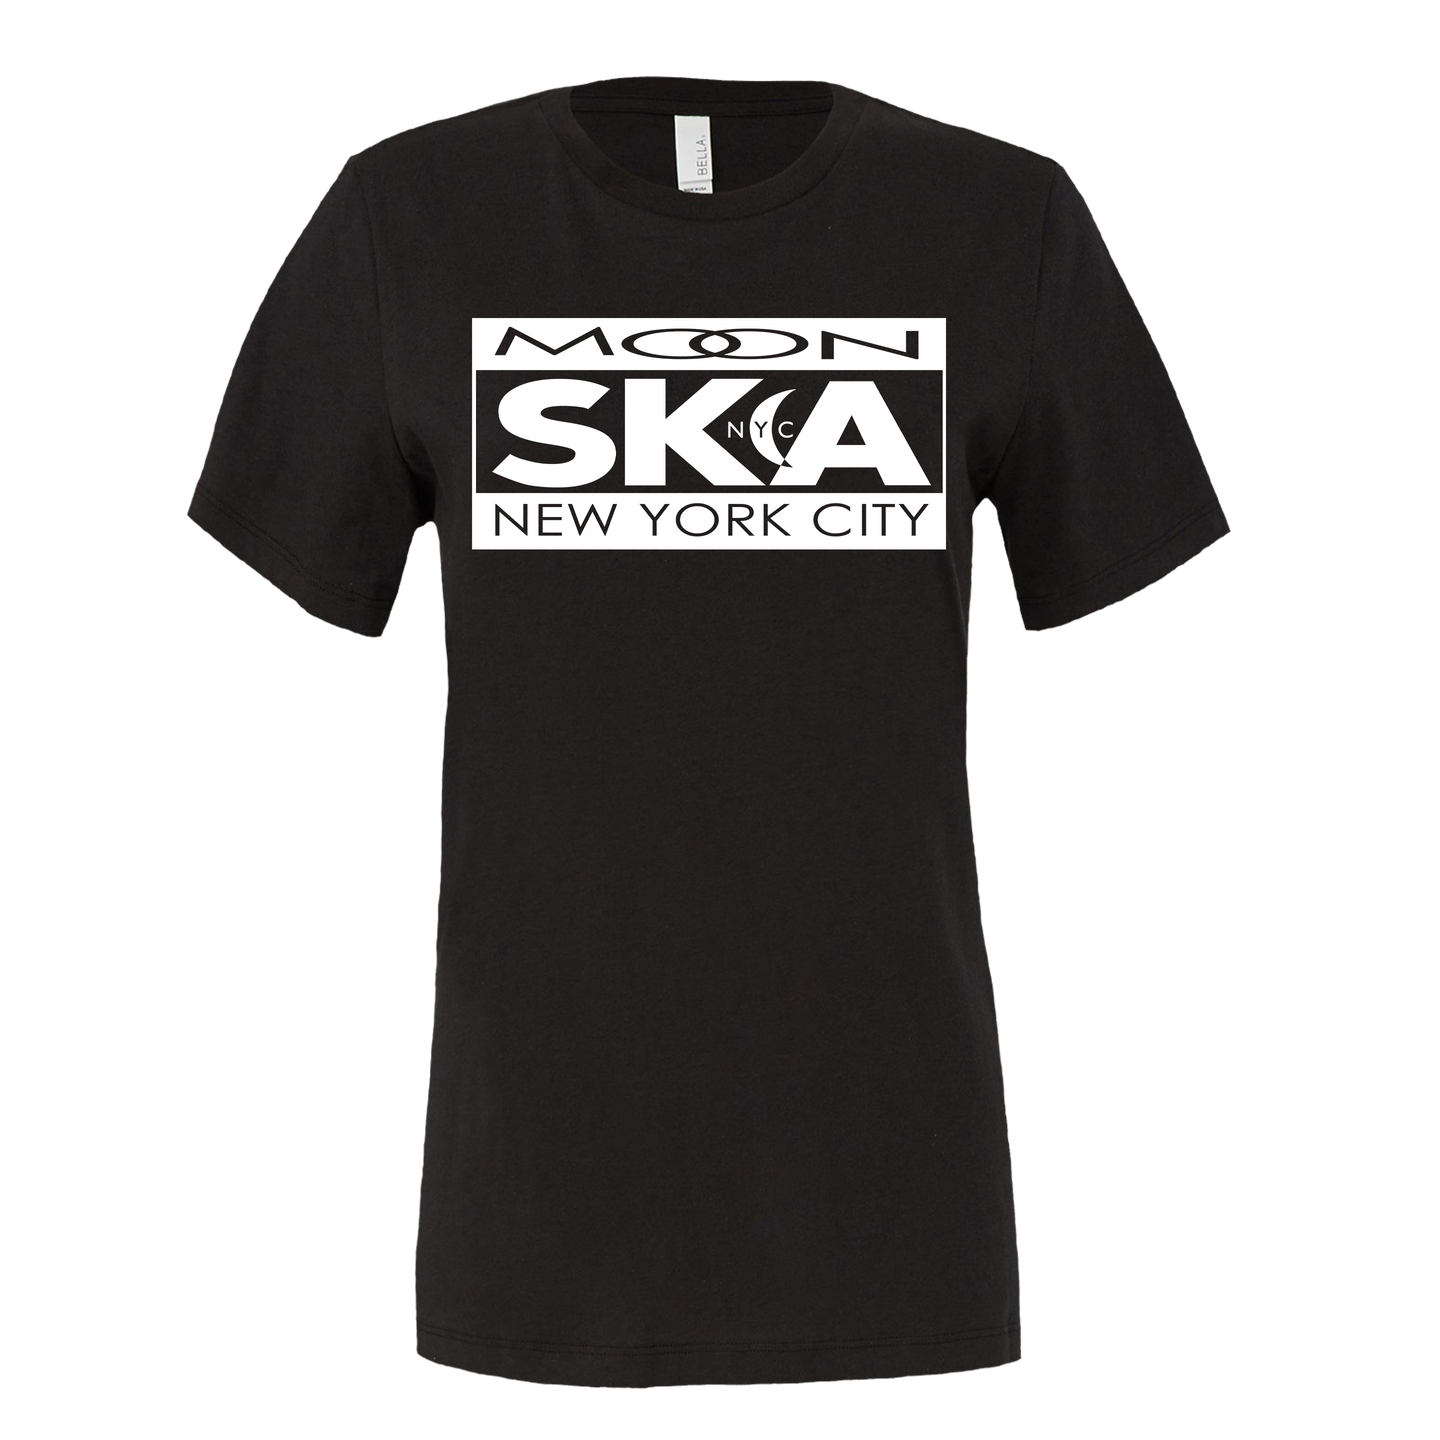 Moon Ska Logo Ladies Shirt - Black